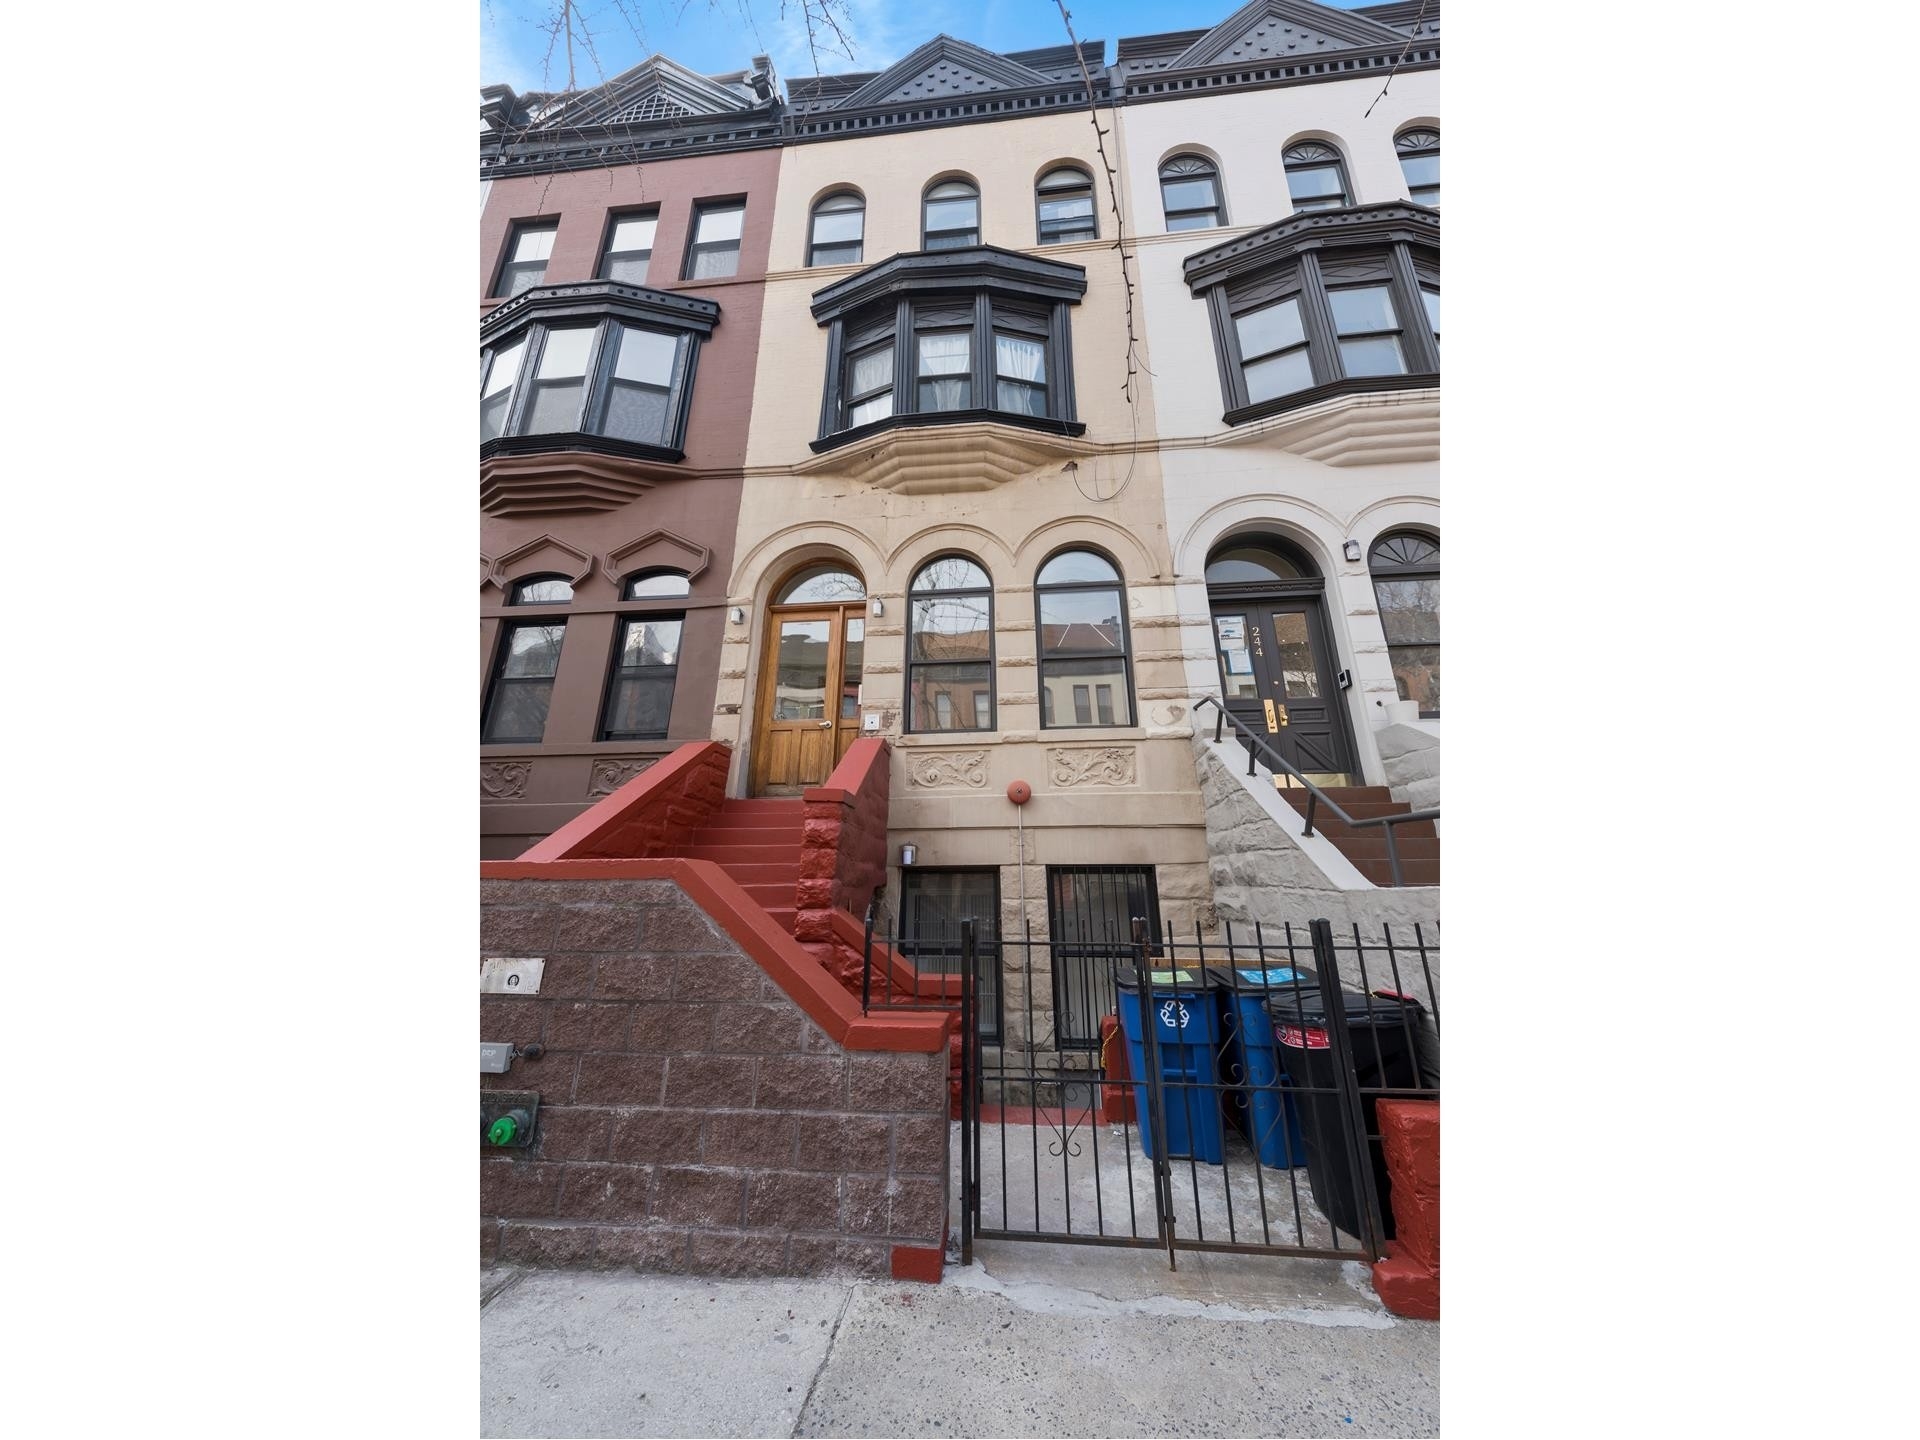 Property at Harlem, New York